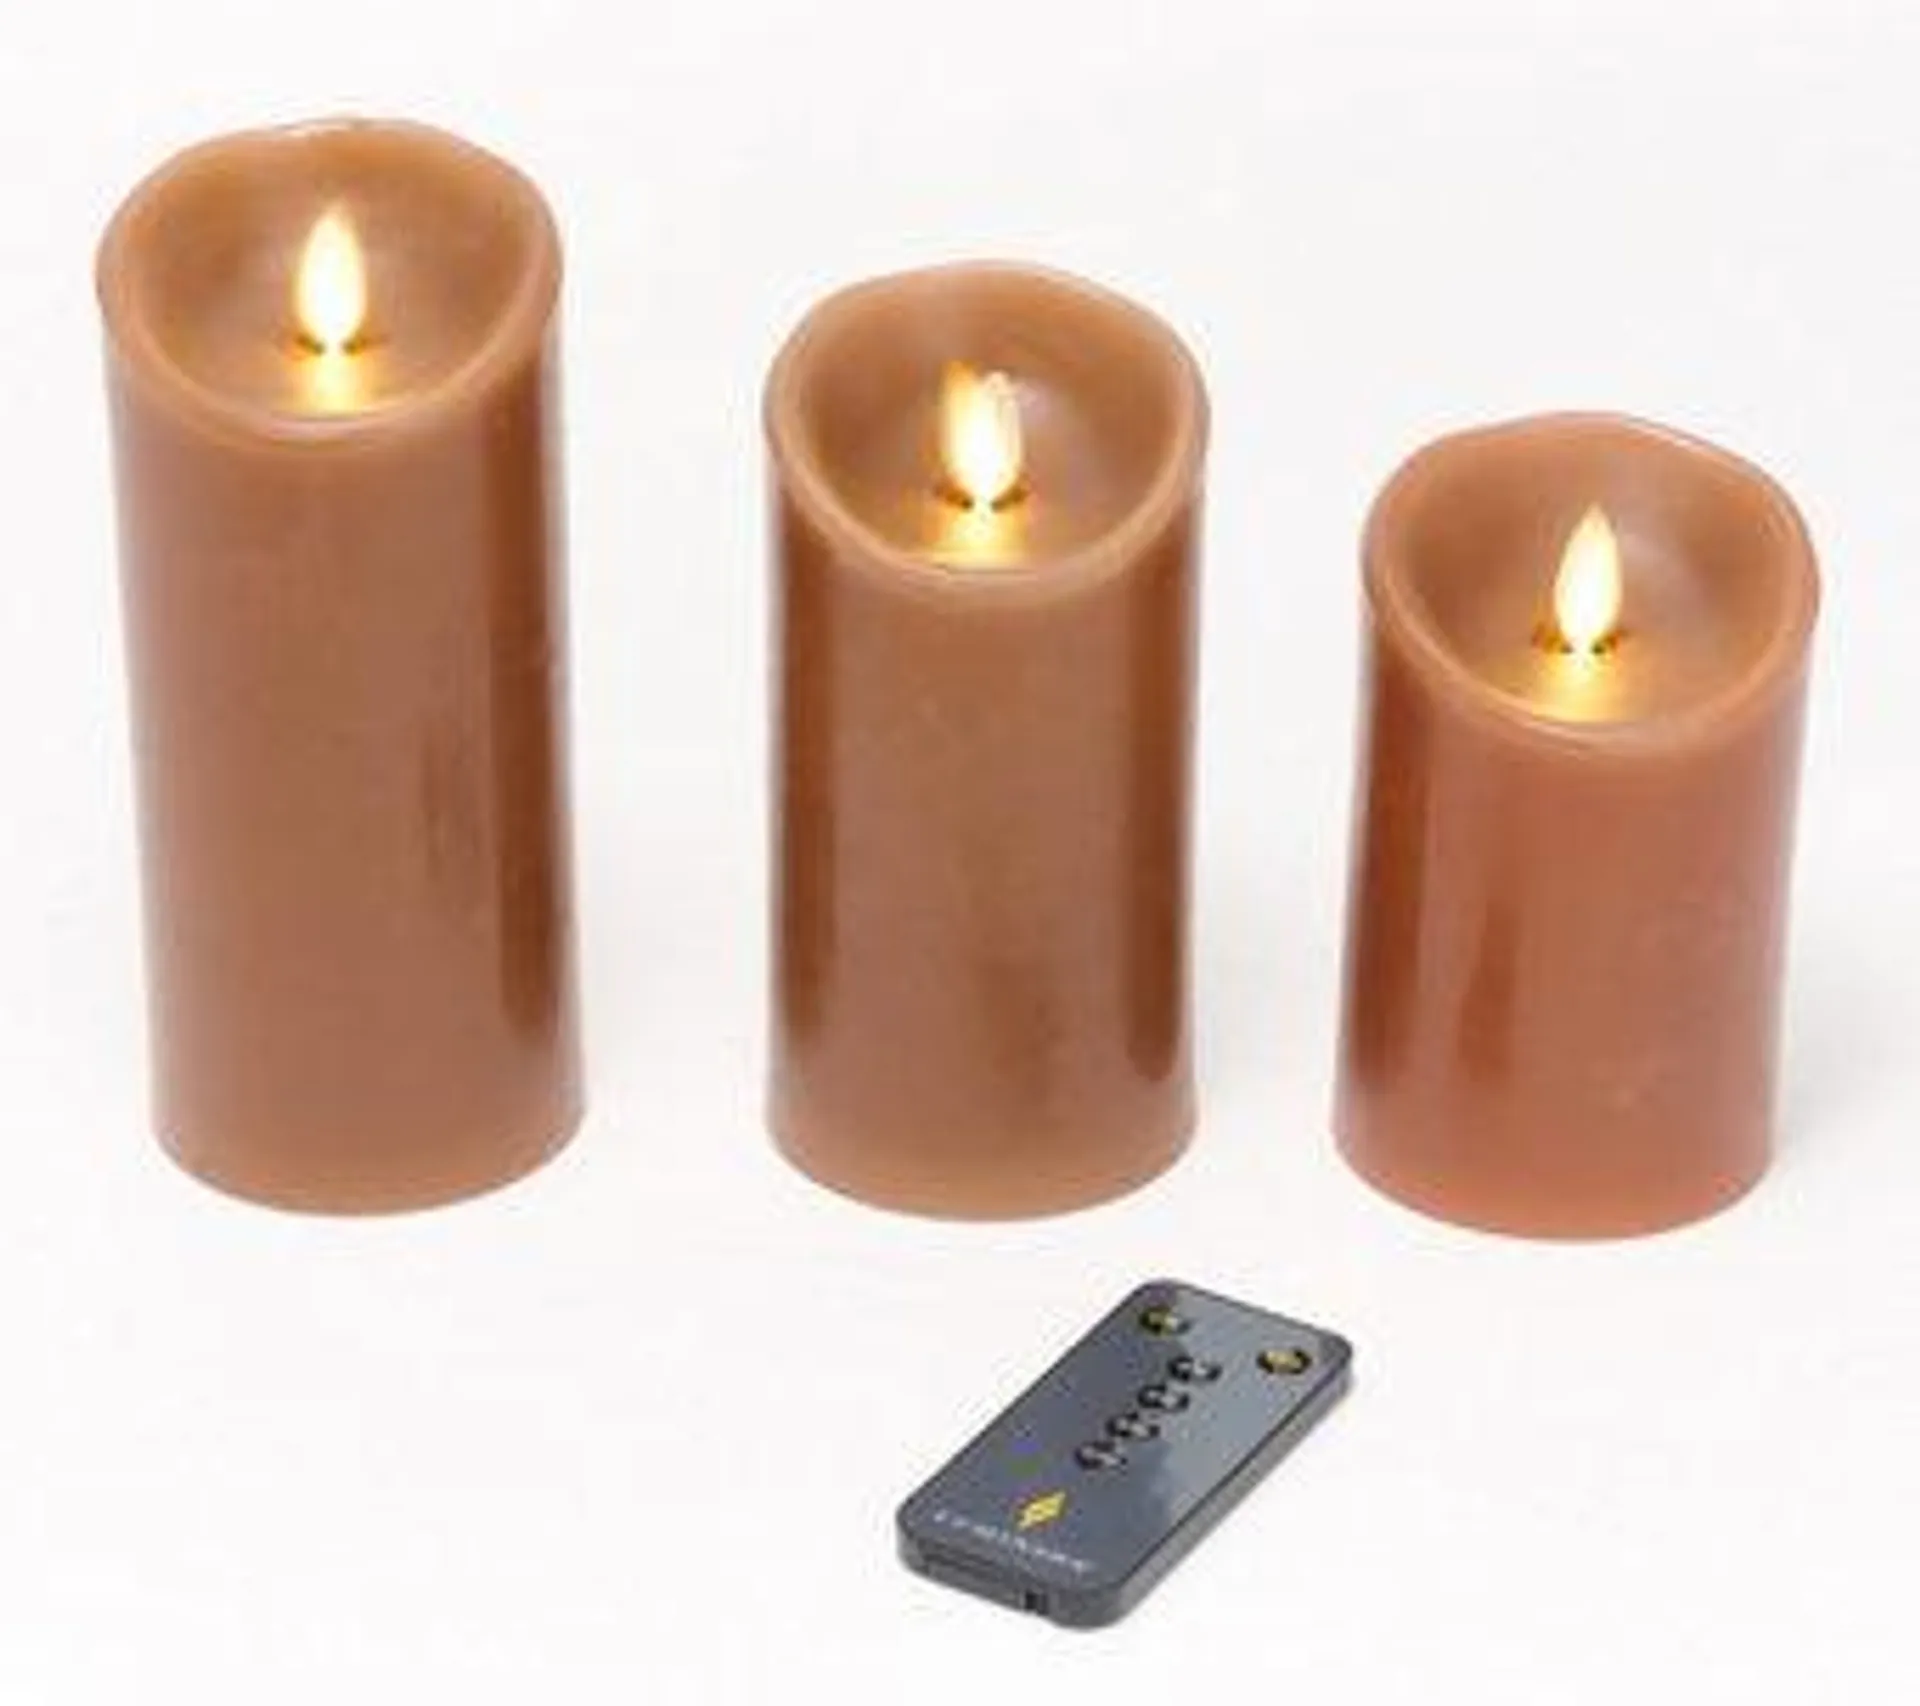 Luminara Set of 3 Assorted Pillars with Remote